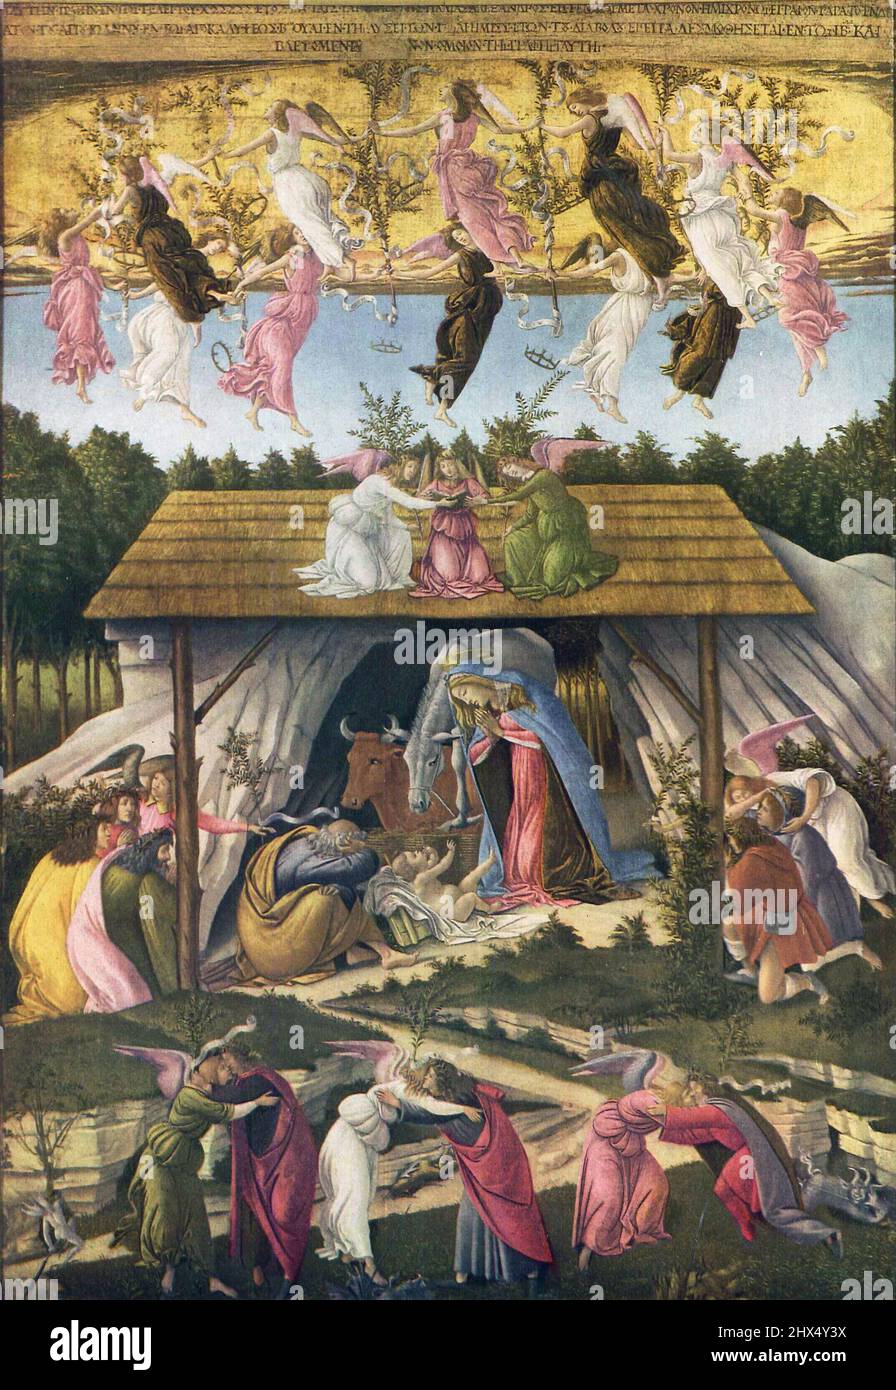 Sandro Botticelli The Mystical Nativity (1500 - 1501), Anbetung des Christkindes, Natividad mística, Mistyczne Narodzenie, 桑德罗·波提切利, 耶稣诞生, סנדרו בוטיצ Stock Photo